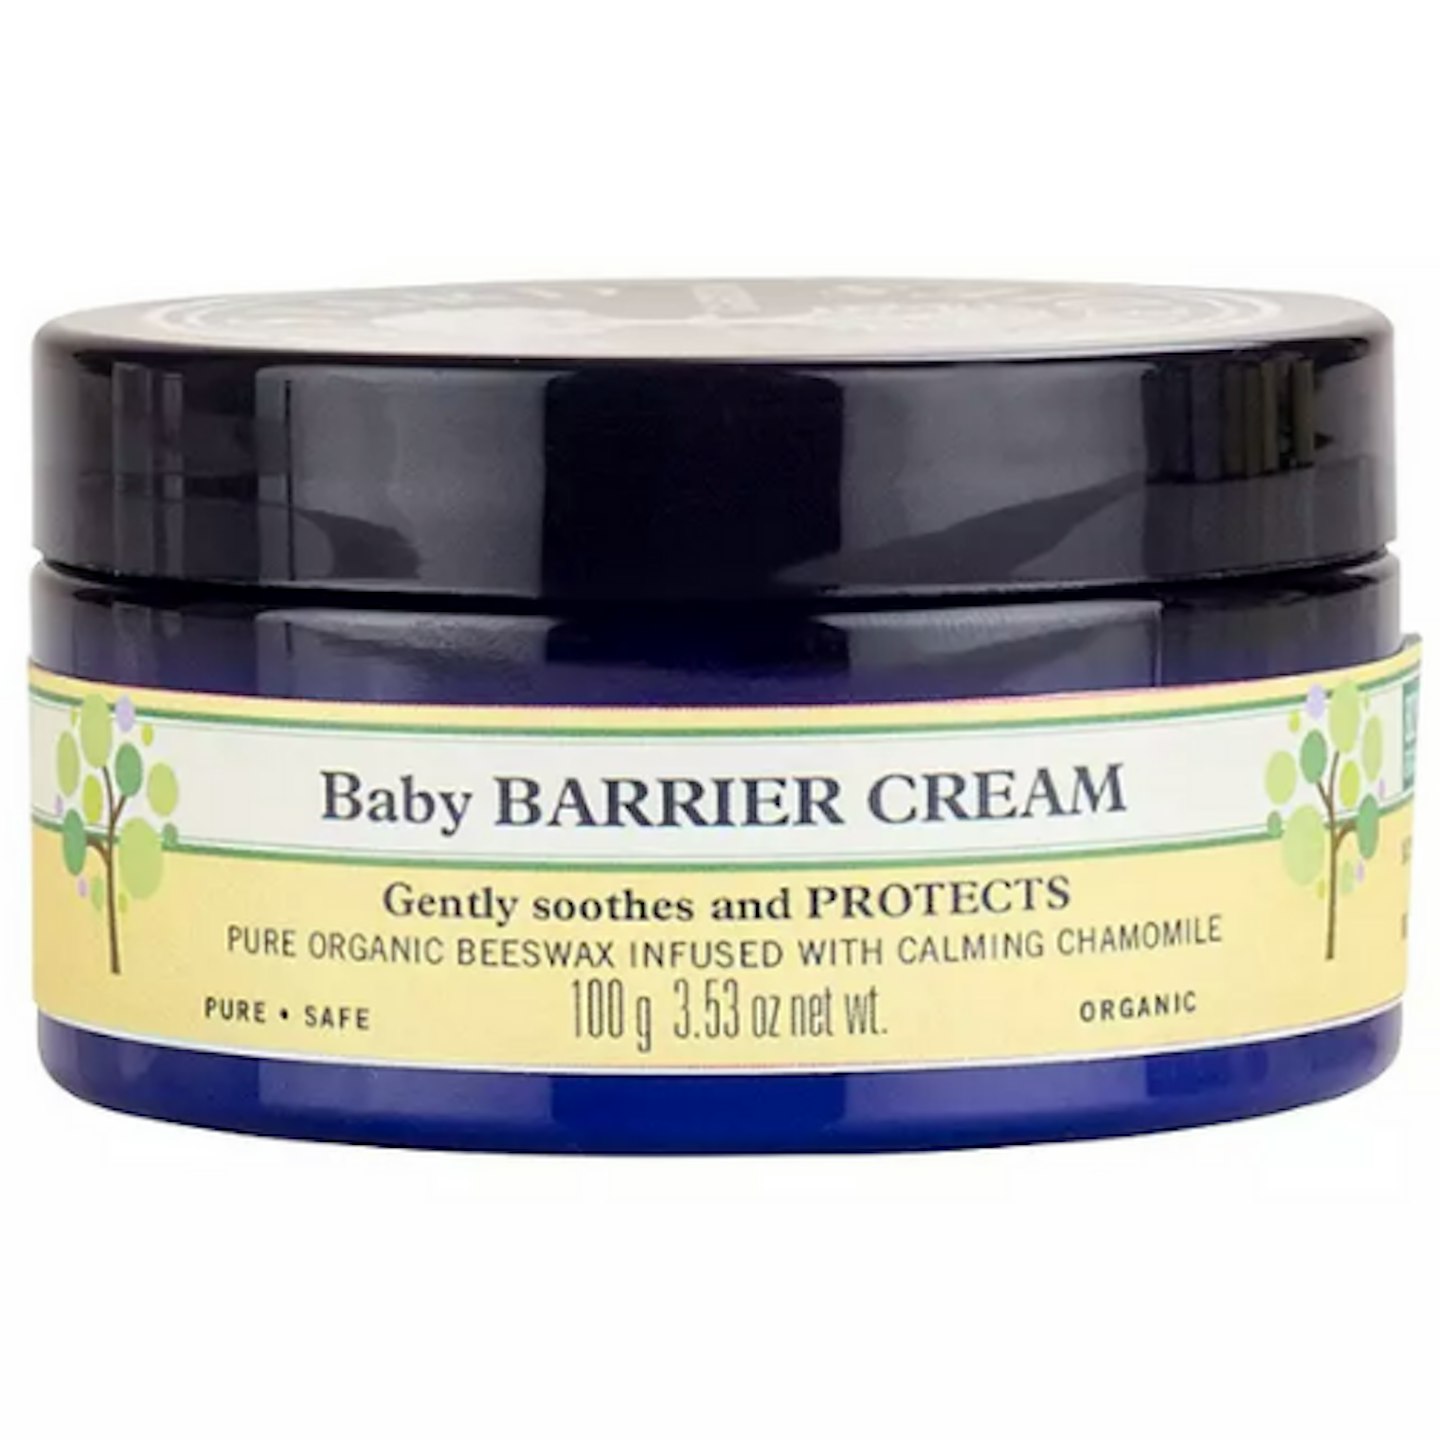 Nealu0026#039;s Yard Remedies Baby Barrier Cream 100g